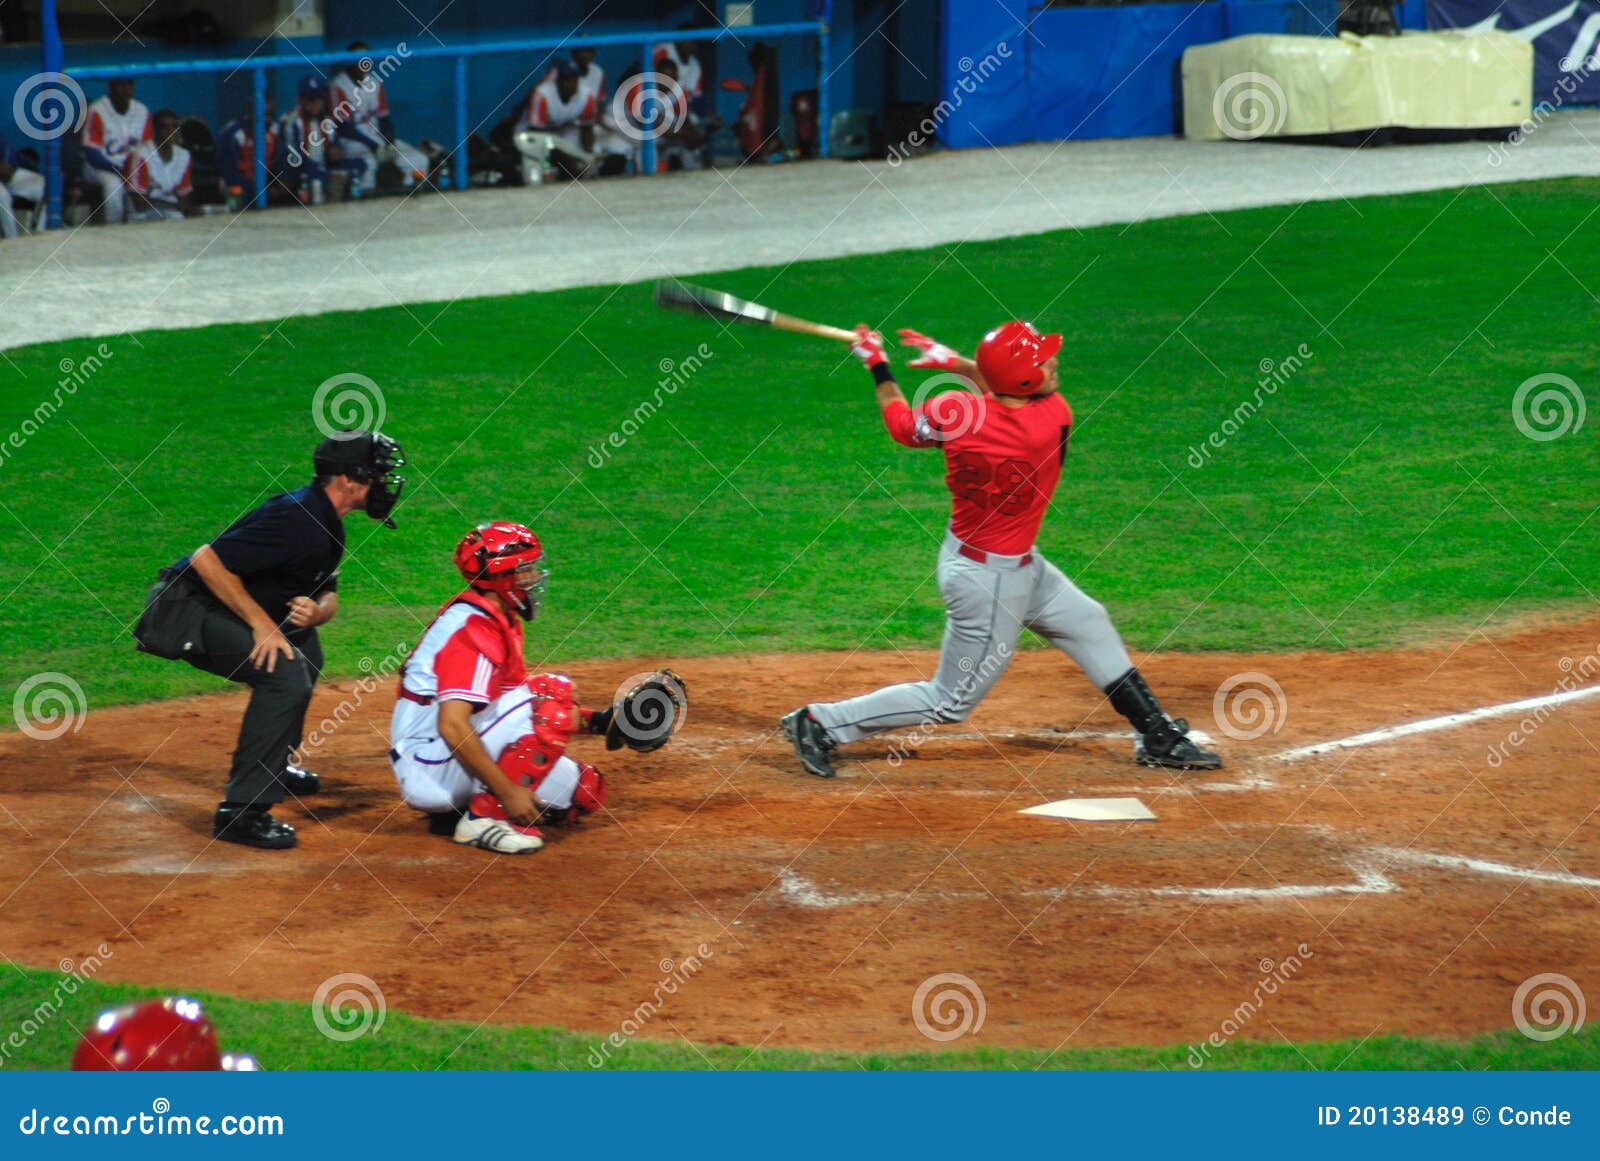 Cubacanada baseball game editorial stock image. Image of ball  20138489